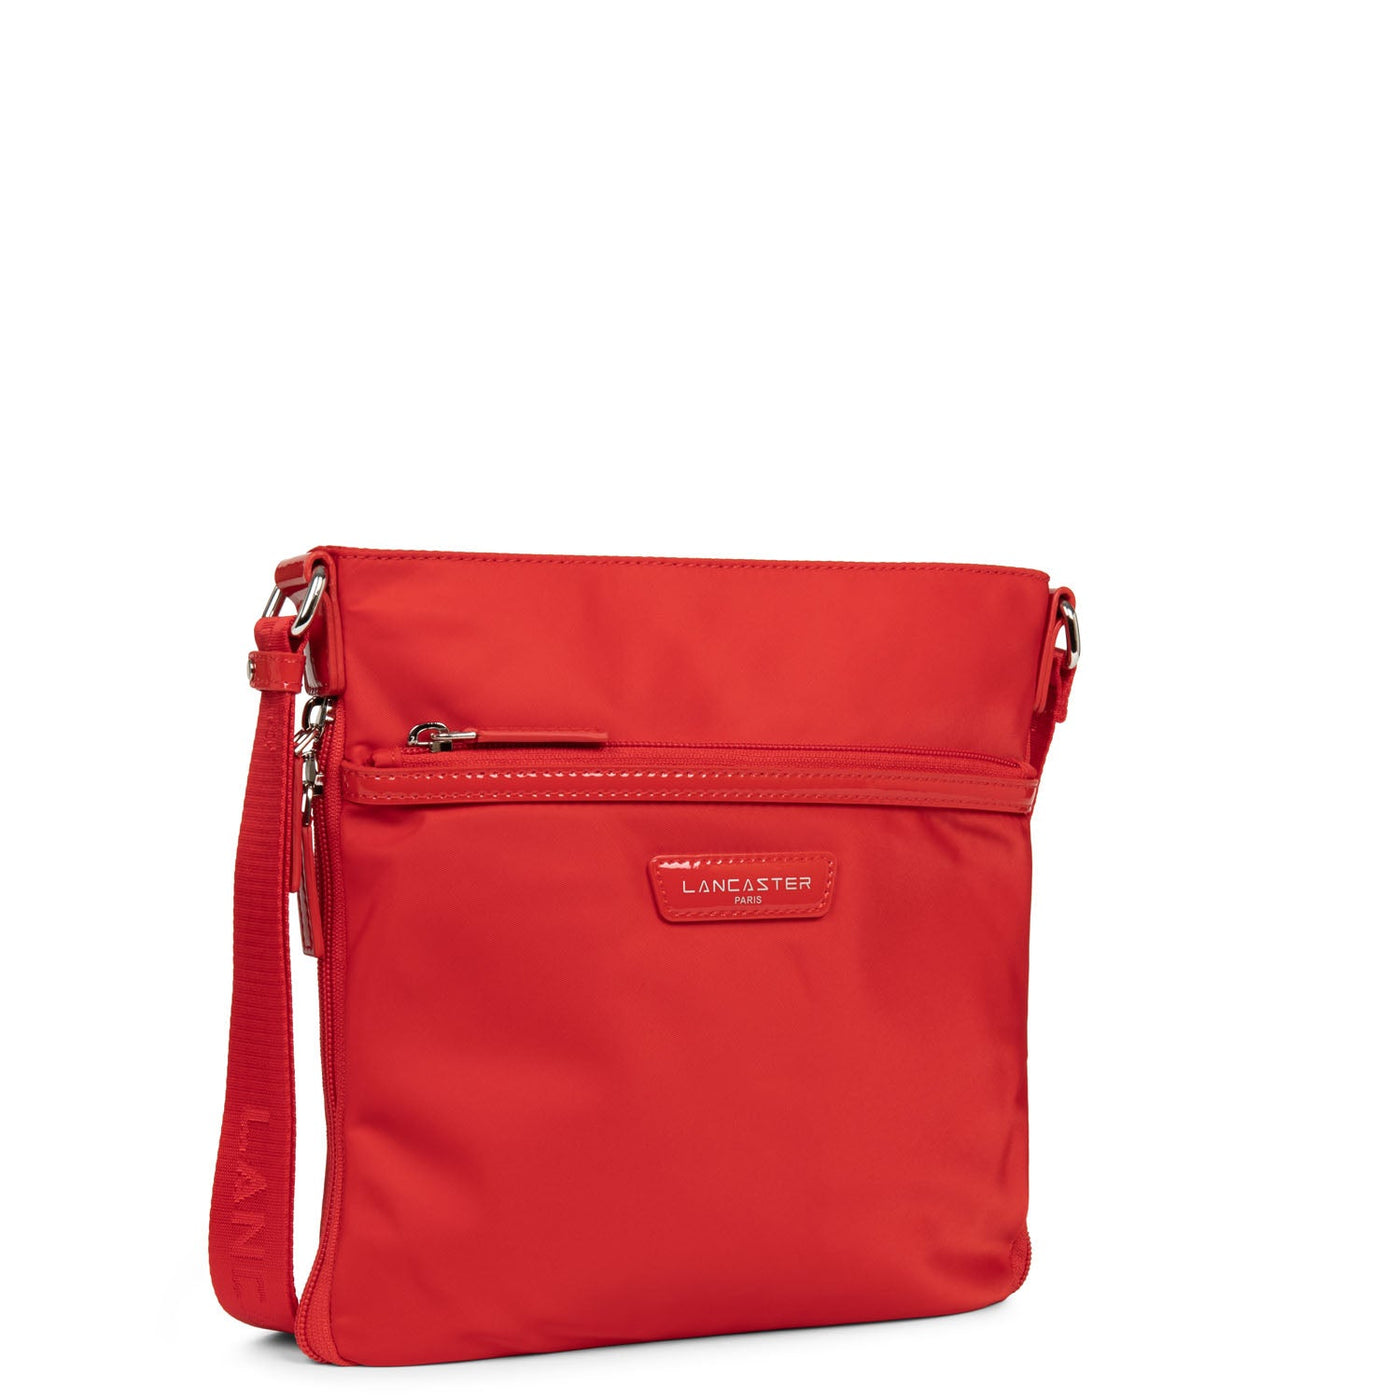 crossbody bag - basic verni #couleur_rouge